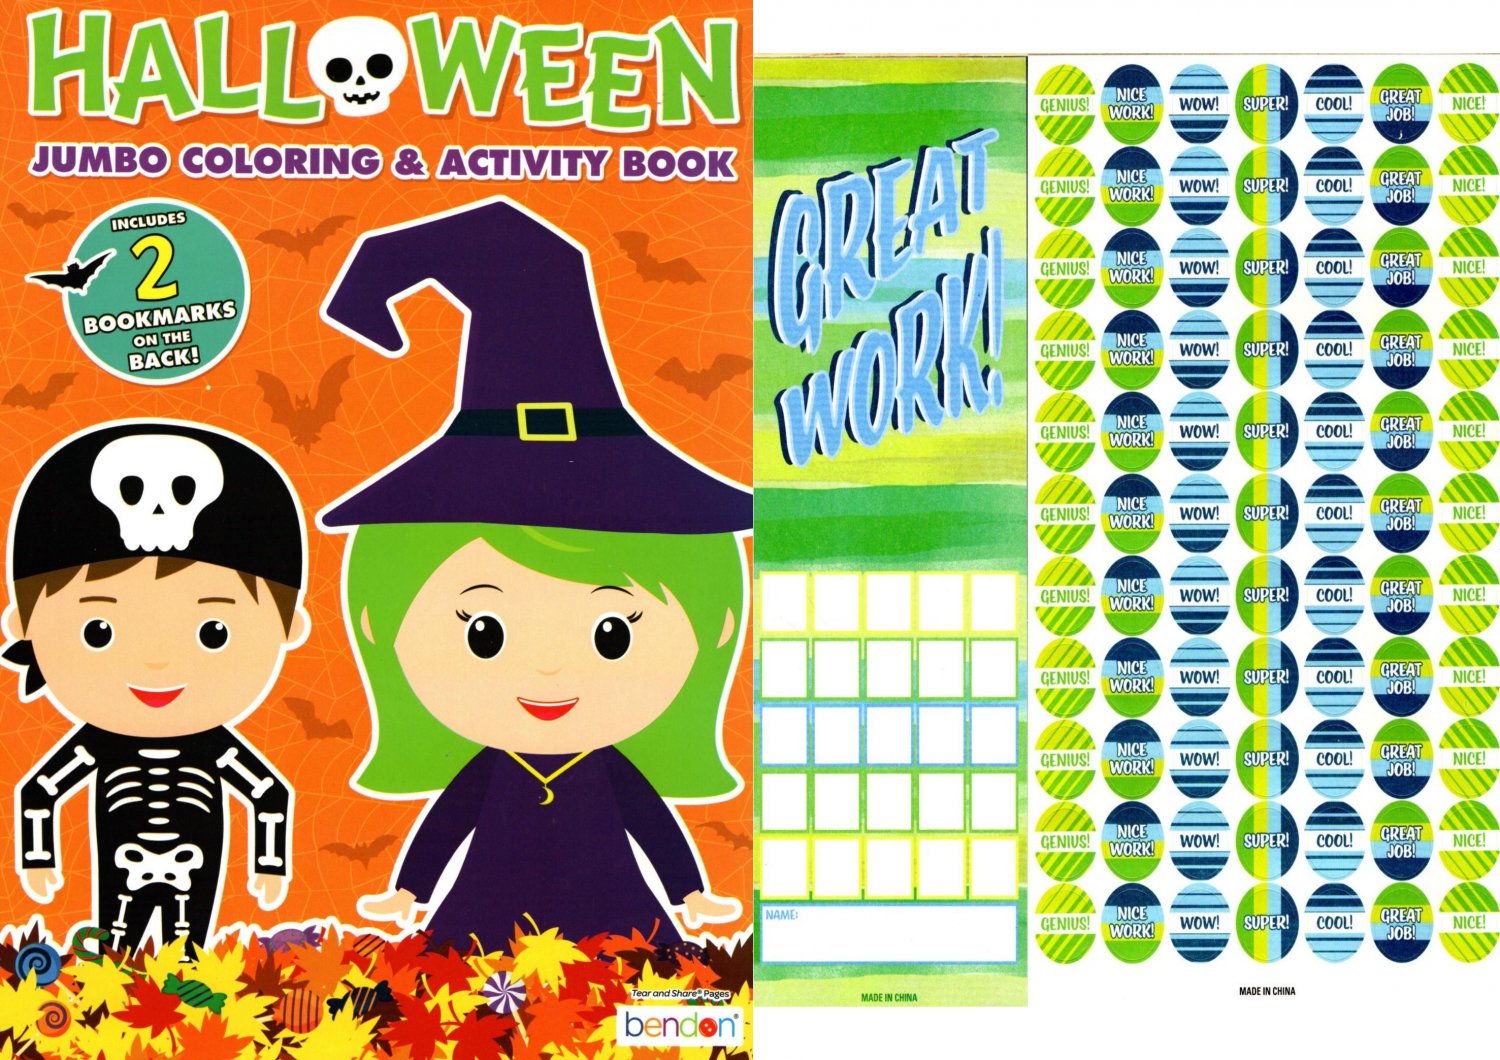 Halloween Jumbo Coloring & Activity Book + Award Stickers and Charts